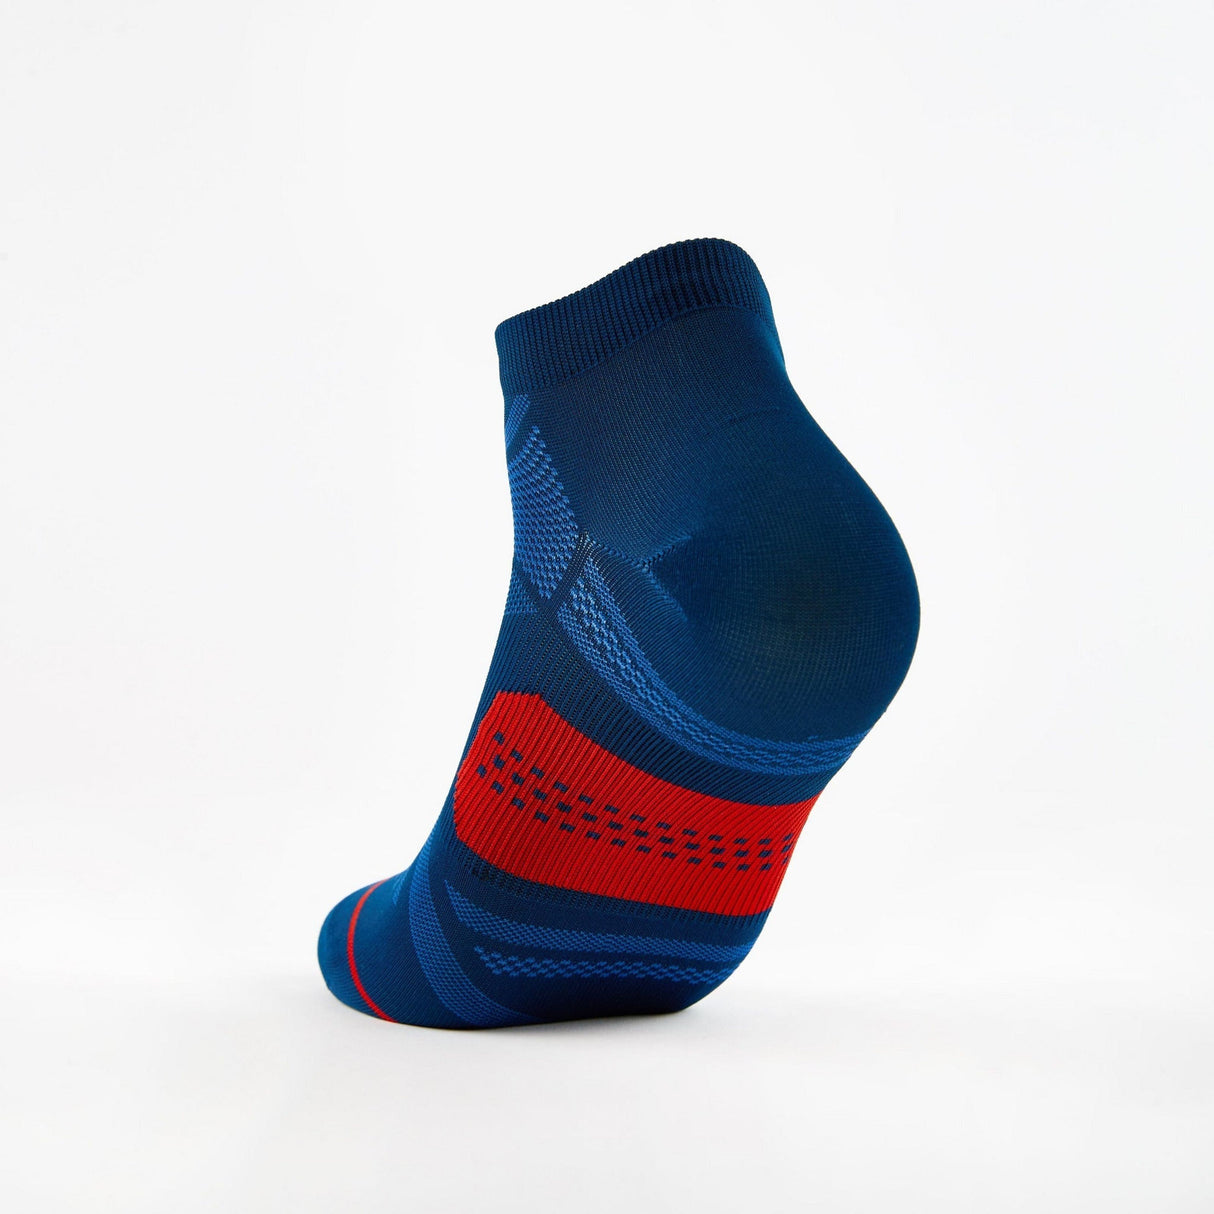 Thorlo Experia X Speed Ultra Light Low Cut Socks  - 